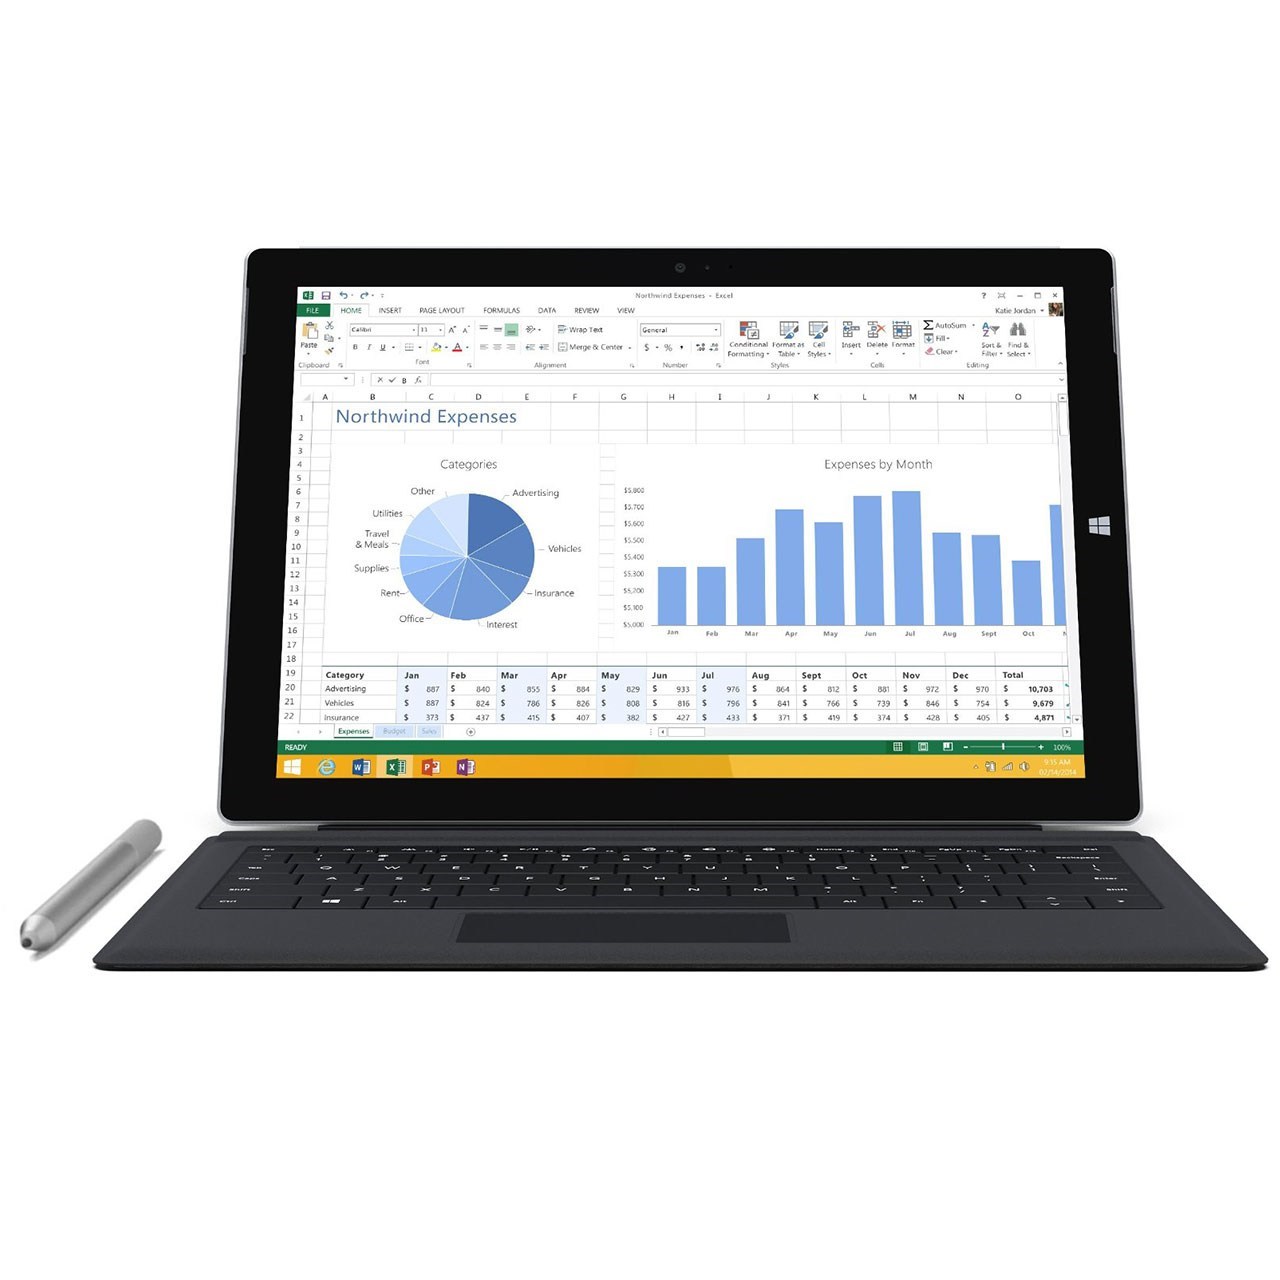 تبلت مایکروسافت مدل Surface Pro 3 - A به همراه کیبورد ظرفیت 128 گیگابایت